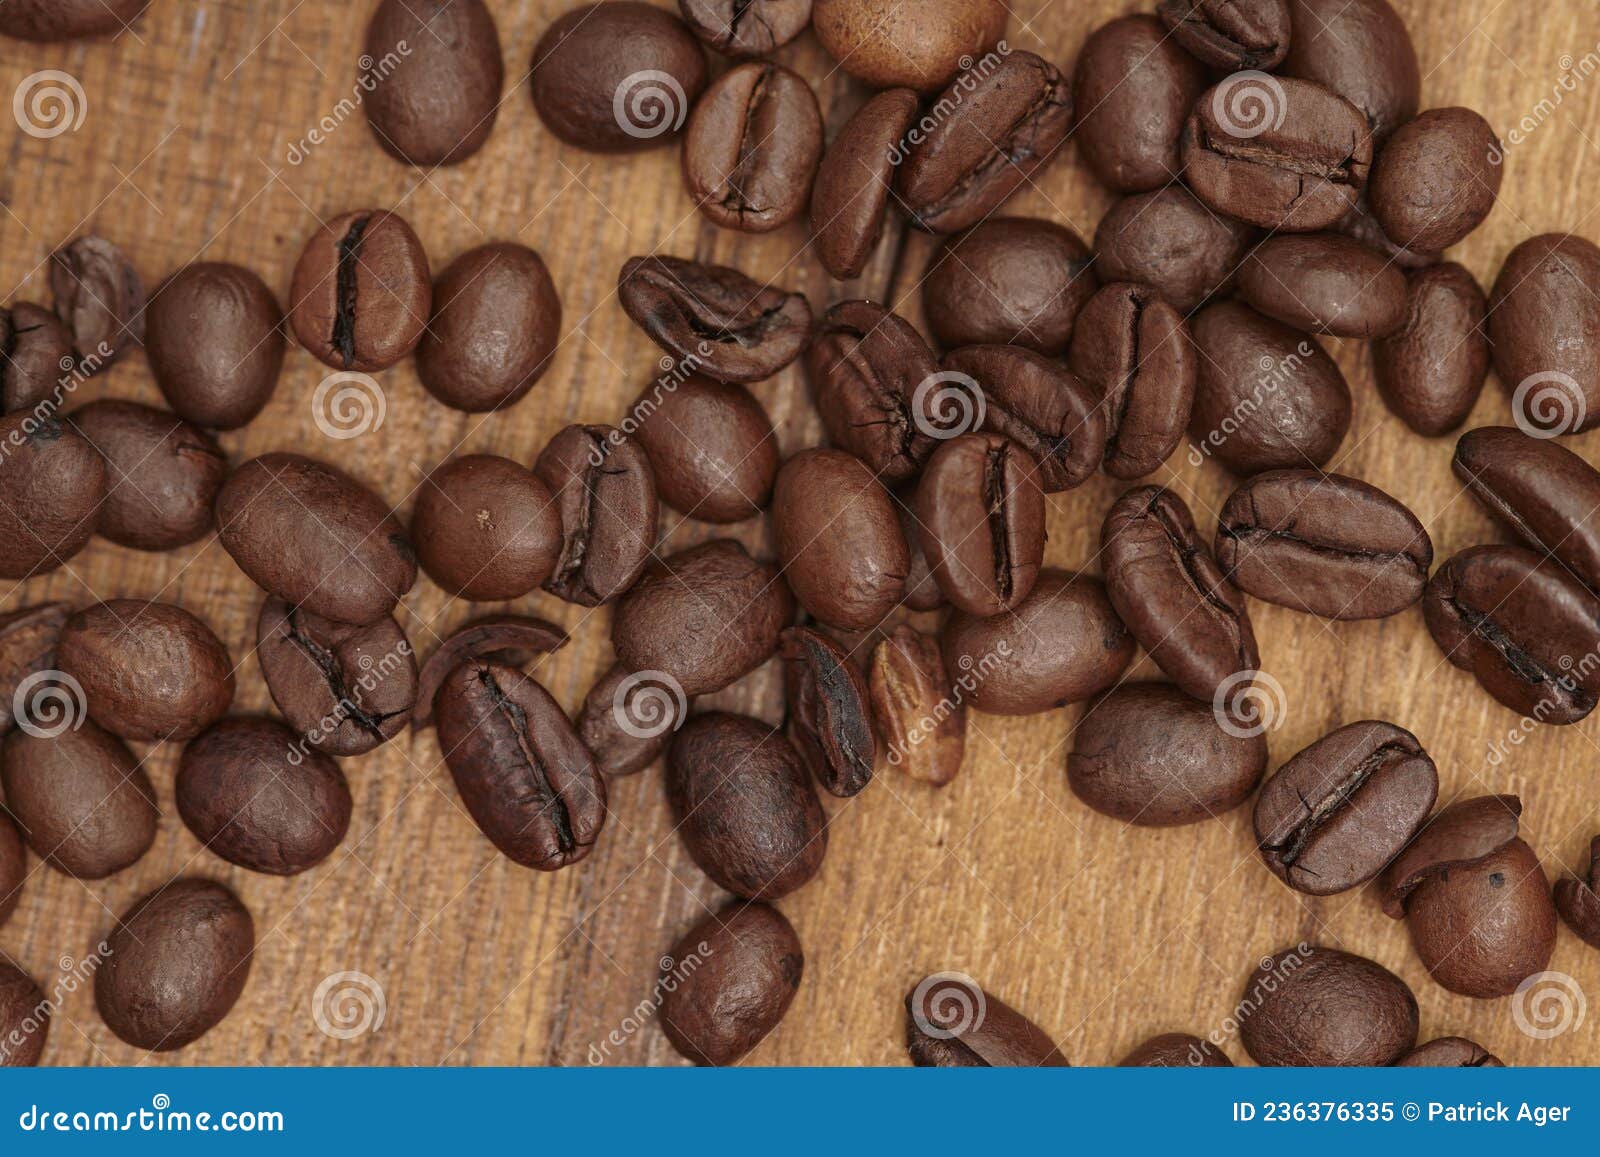 coffee beans on zebrano wood cutting board